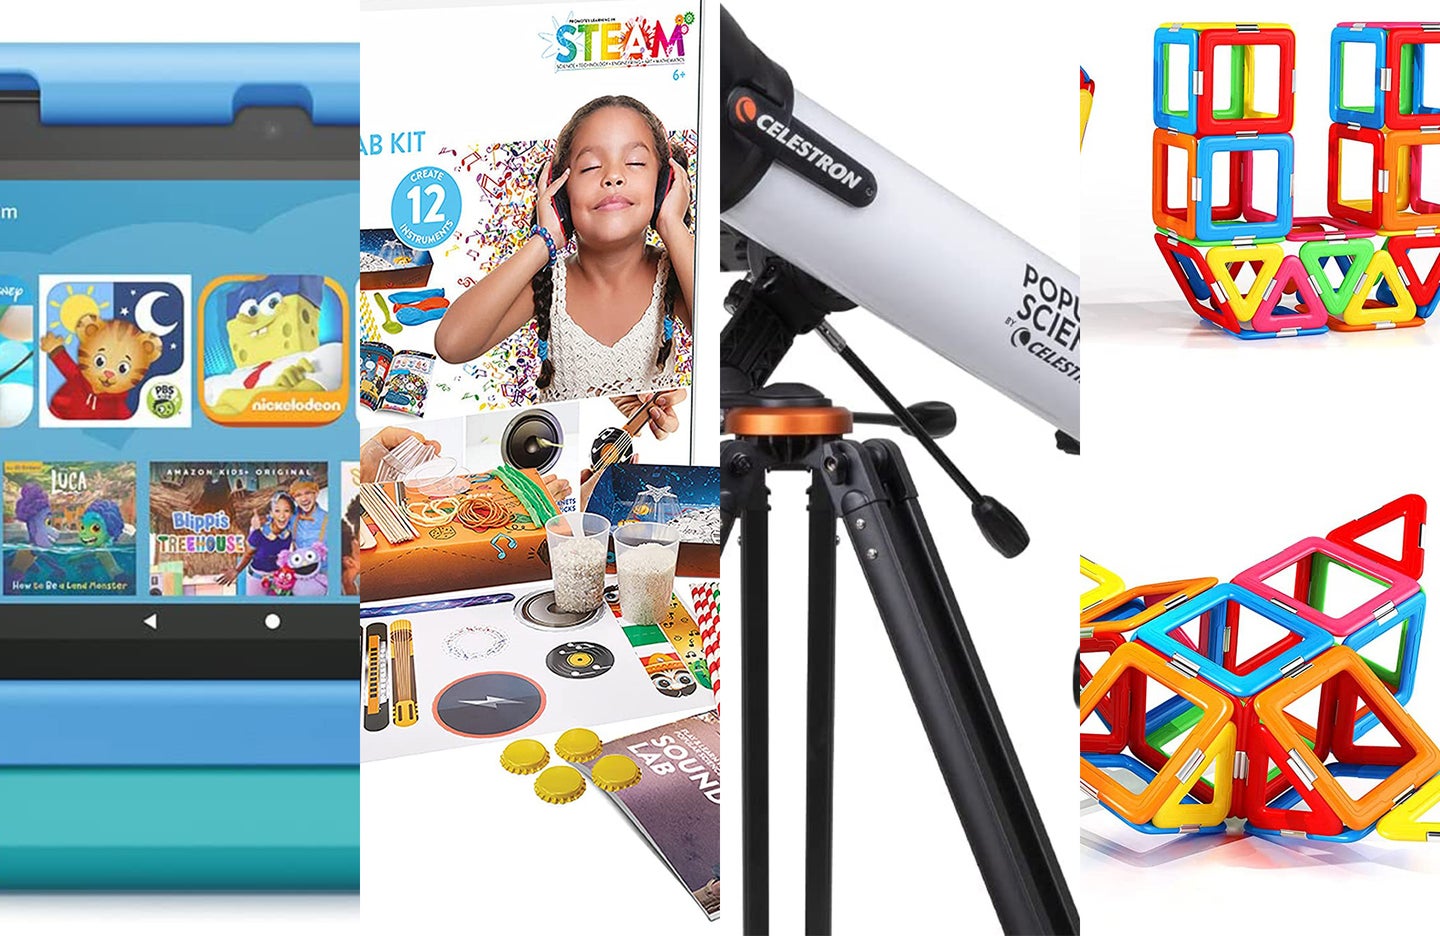 STEM toys on sale on Amazon on a white background